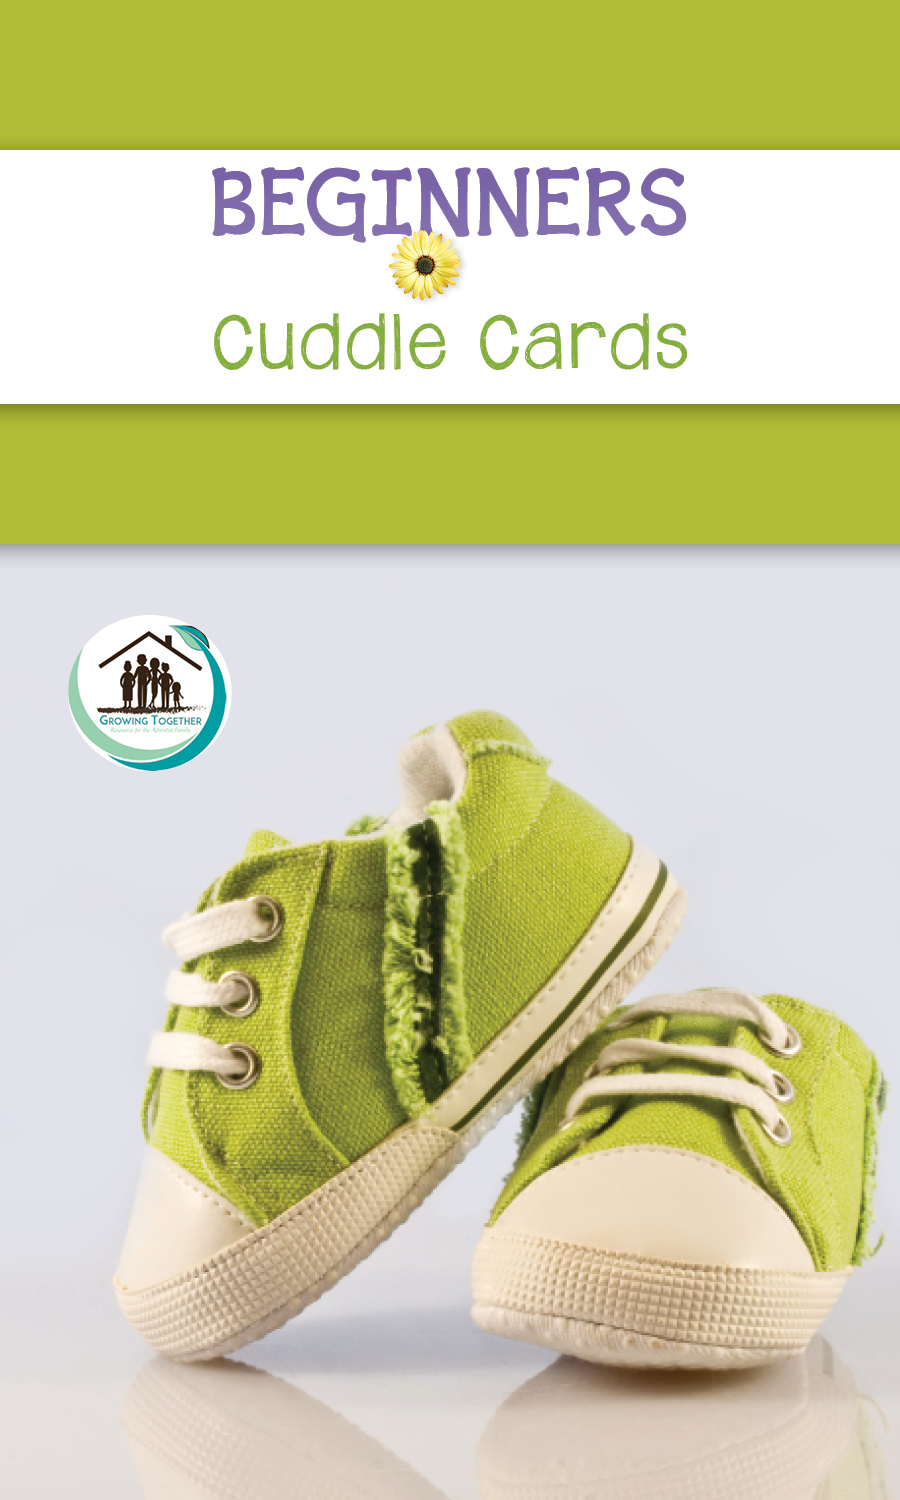 GTC Cuddle Cards Qtr 1 19-Subscripti